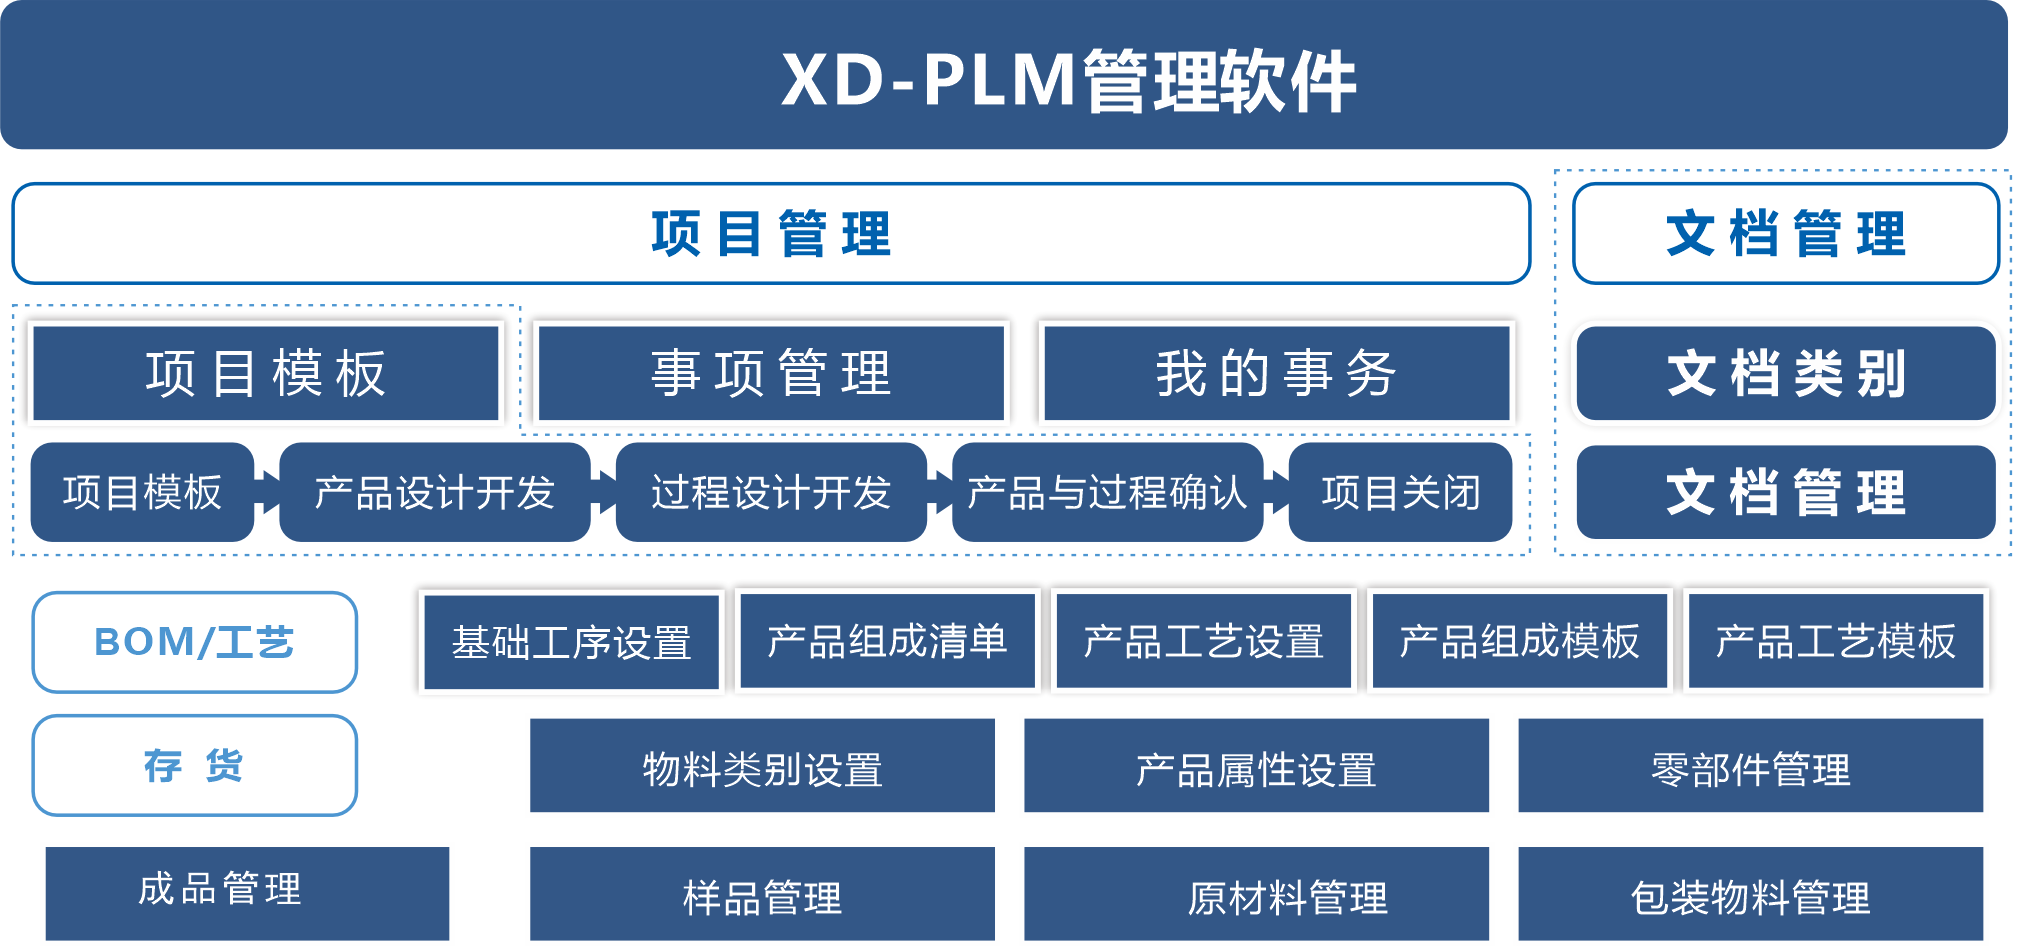 XD-PLM管理系统